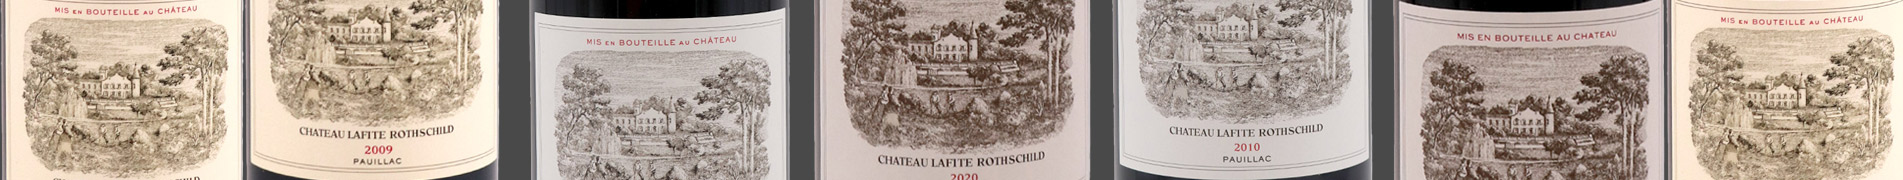 Lafite Rothschild Wines